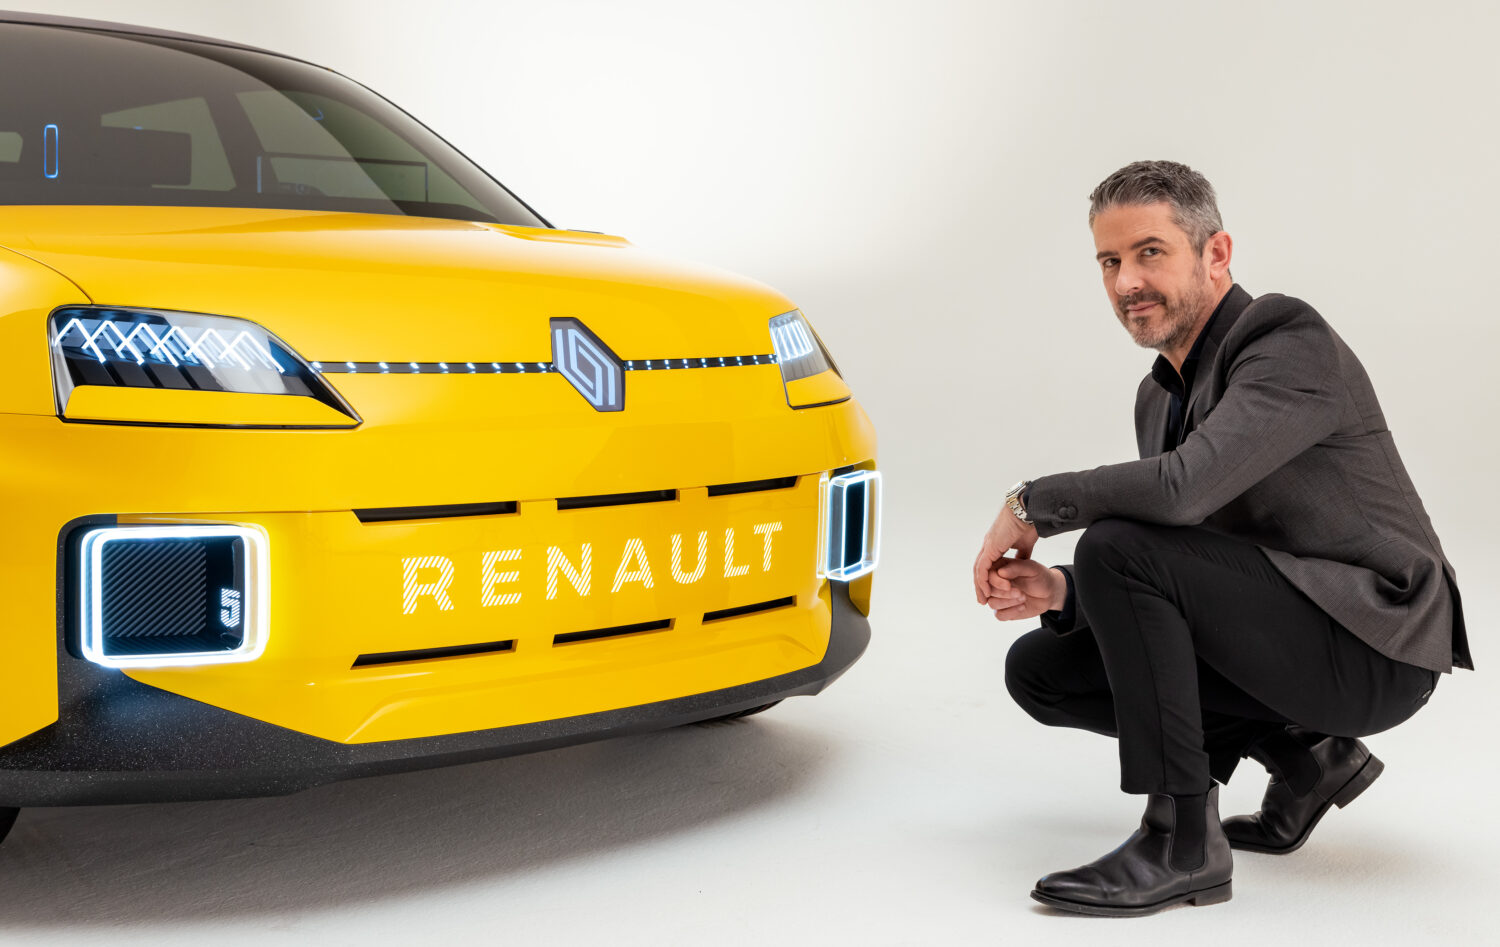 2021 - Renault 5 Prototype and Gilles VIDAL, designer